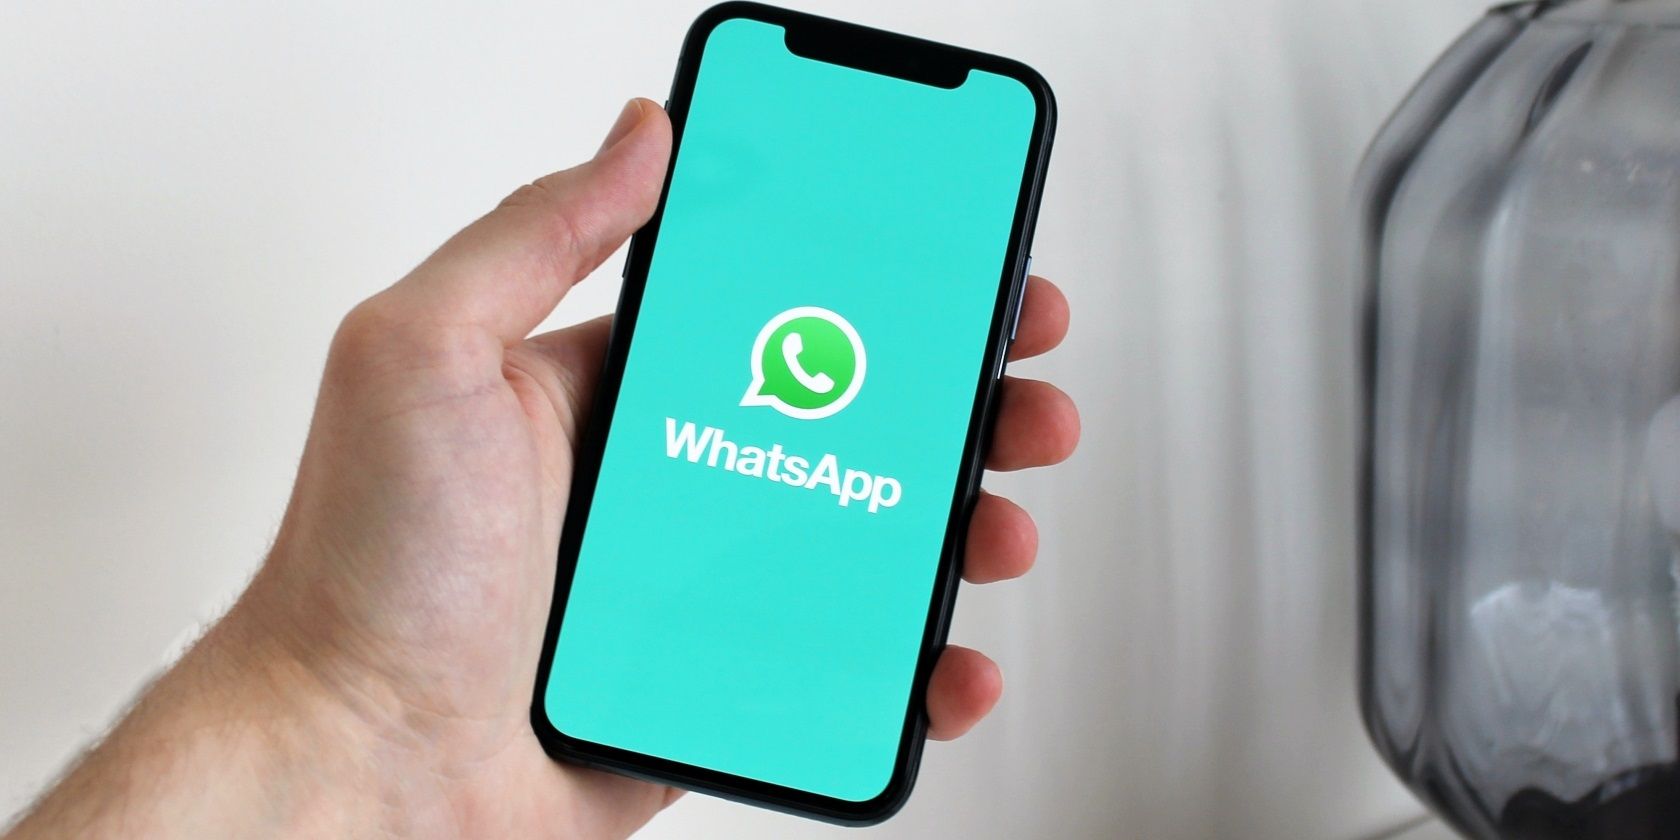 whatsapp logo on cellphone screen